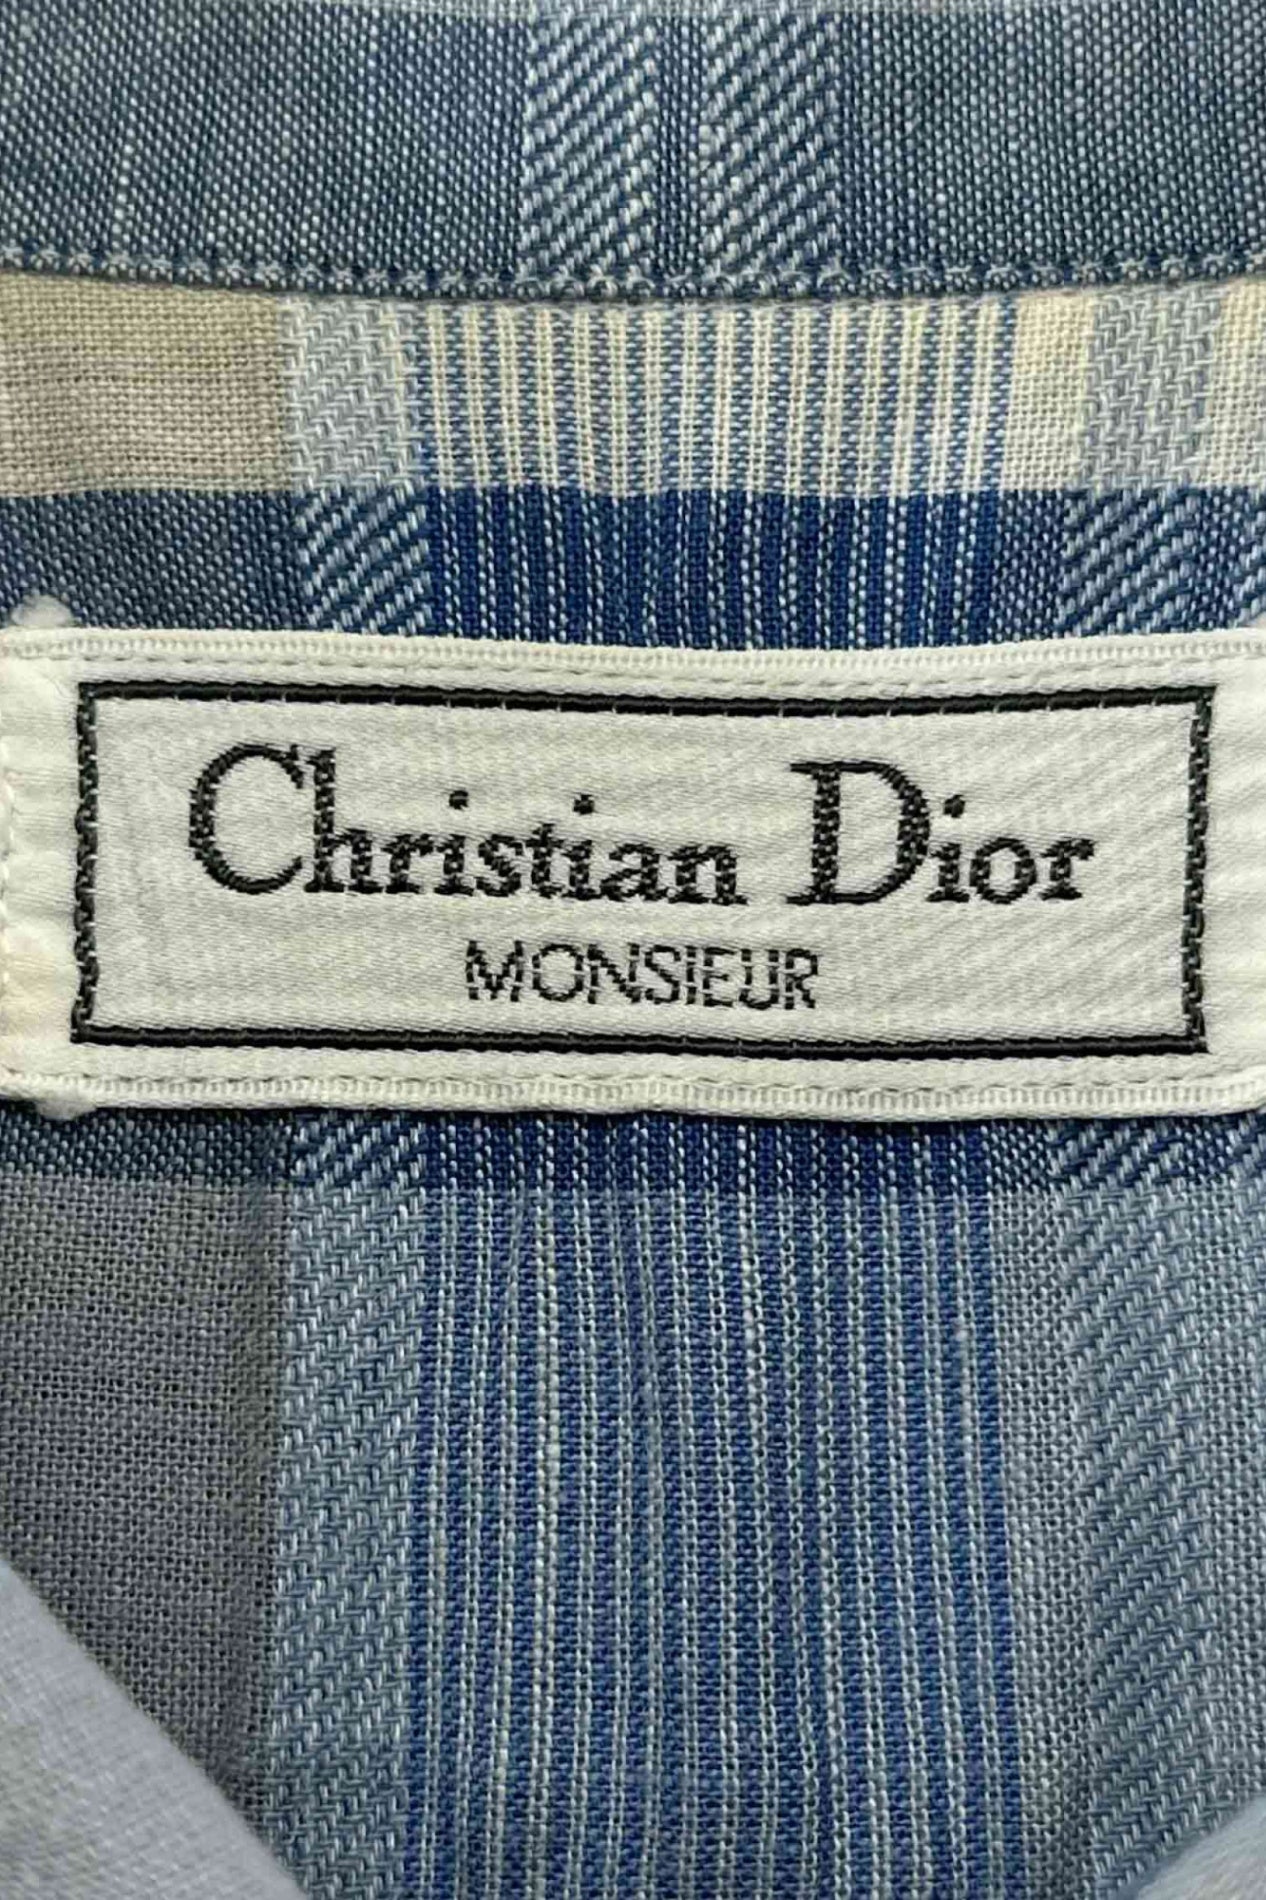 Christian Dior MONSIEUR check shirt